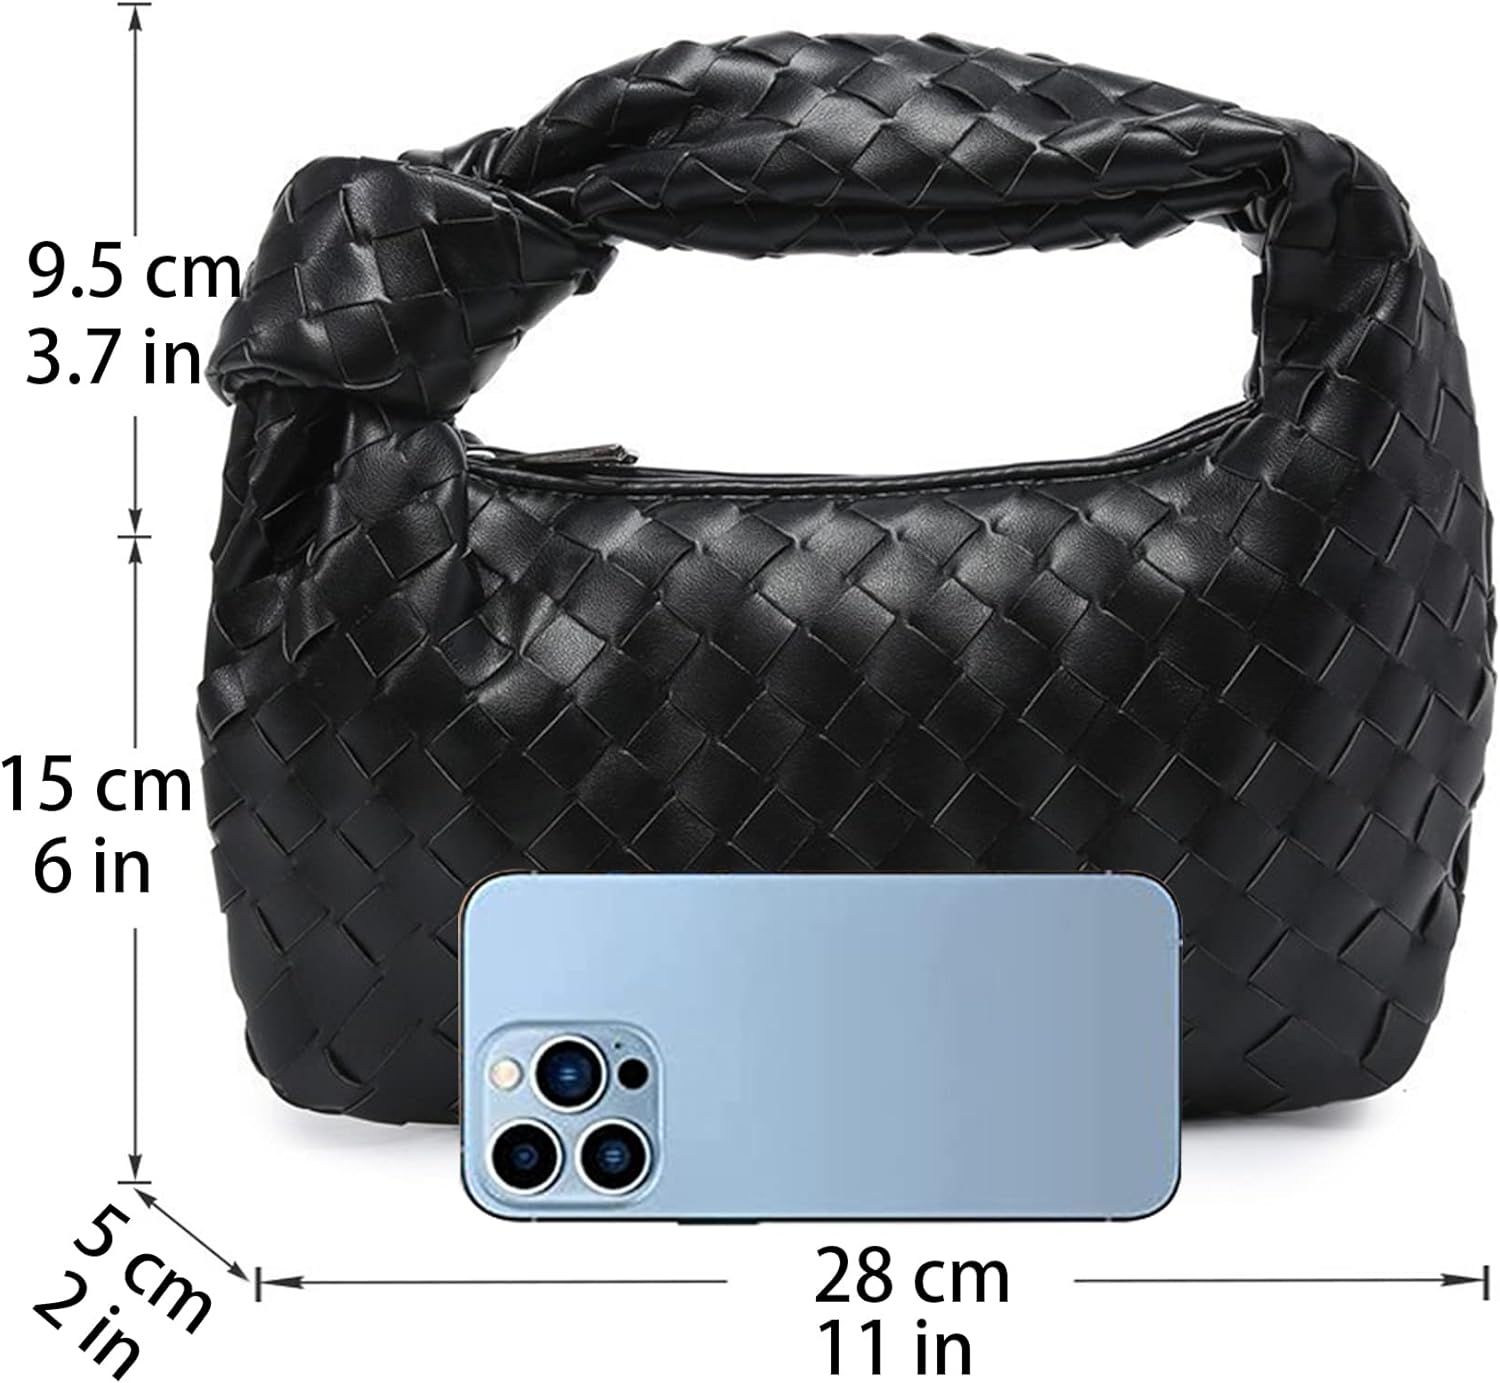 Woven Handbag for Women Soft PU Leather Knoted Woven Shoulder Bag Fashion Designer Ladies Hobo Ba... | Amazon (US)